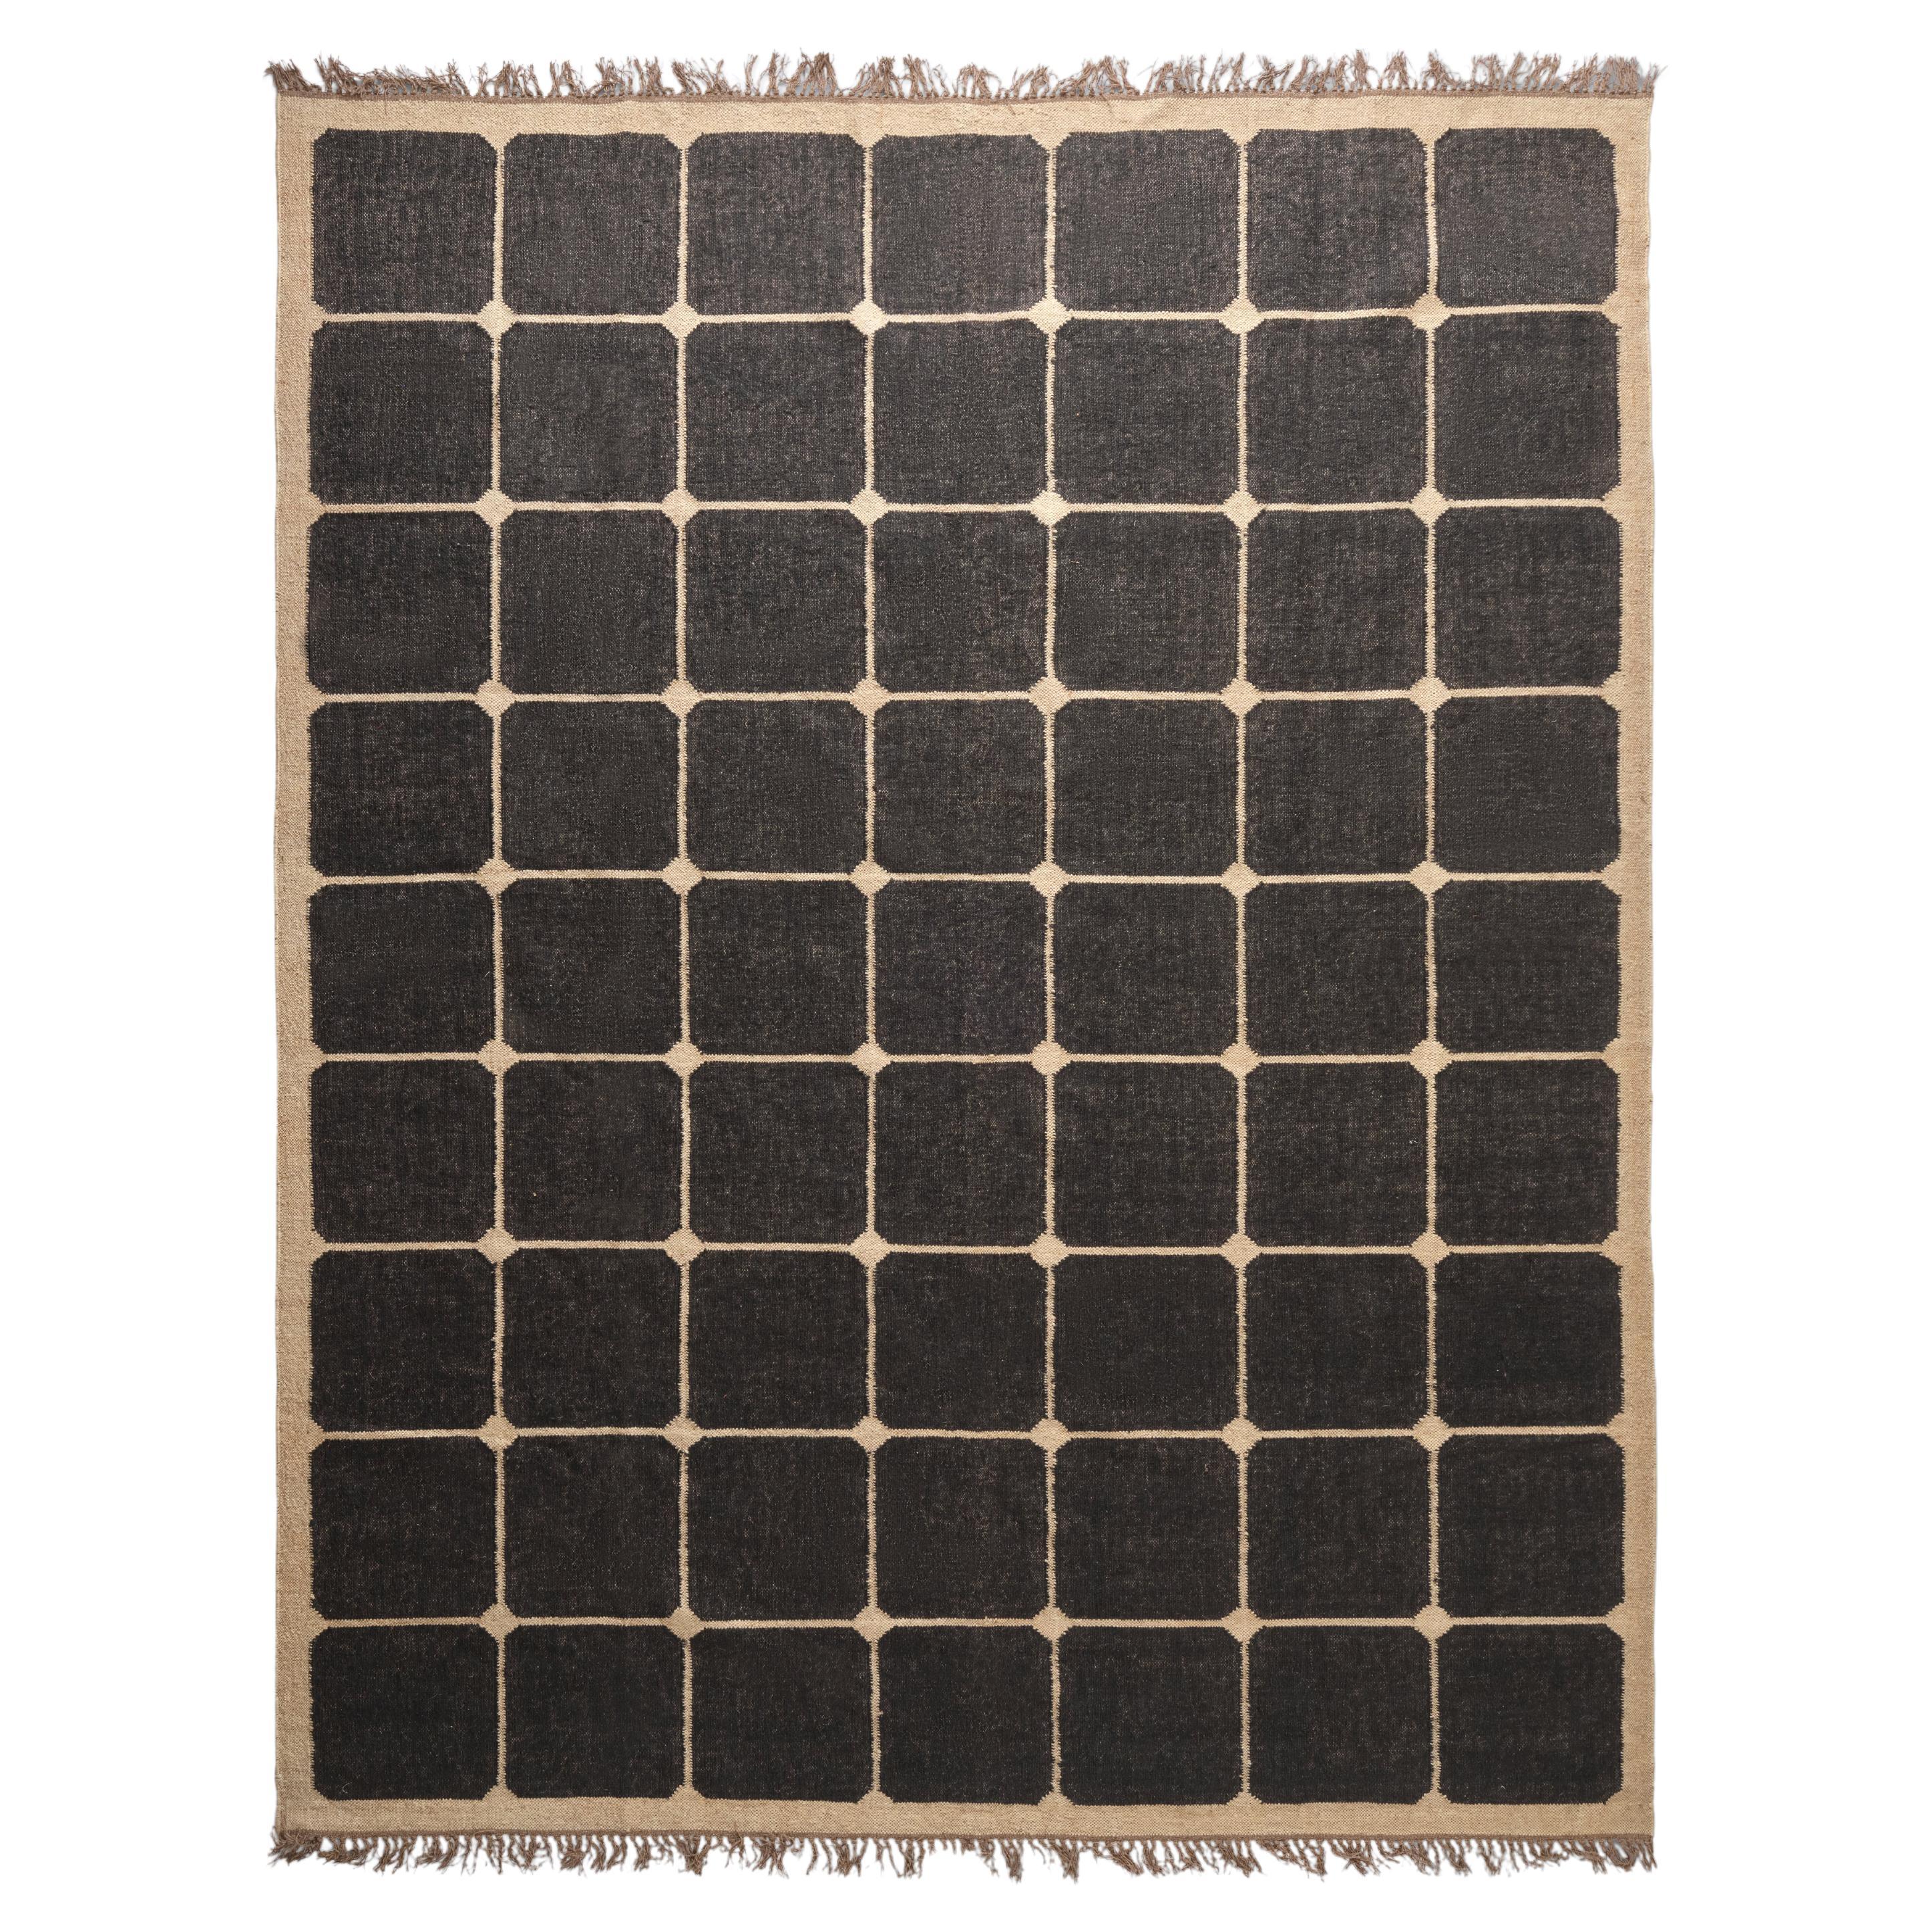 The Forsyth Checkerboard Rug - Dark Tile Checks in Off Black, 9x12